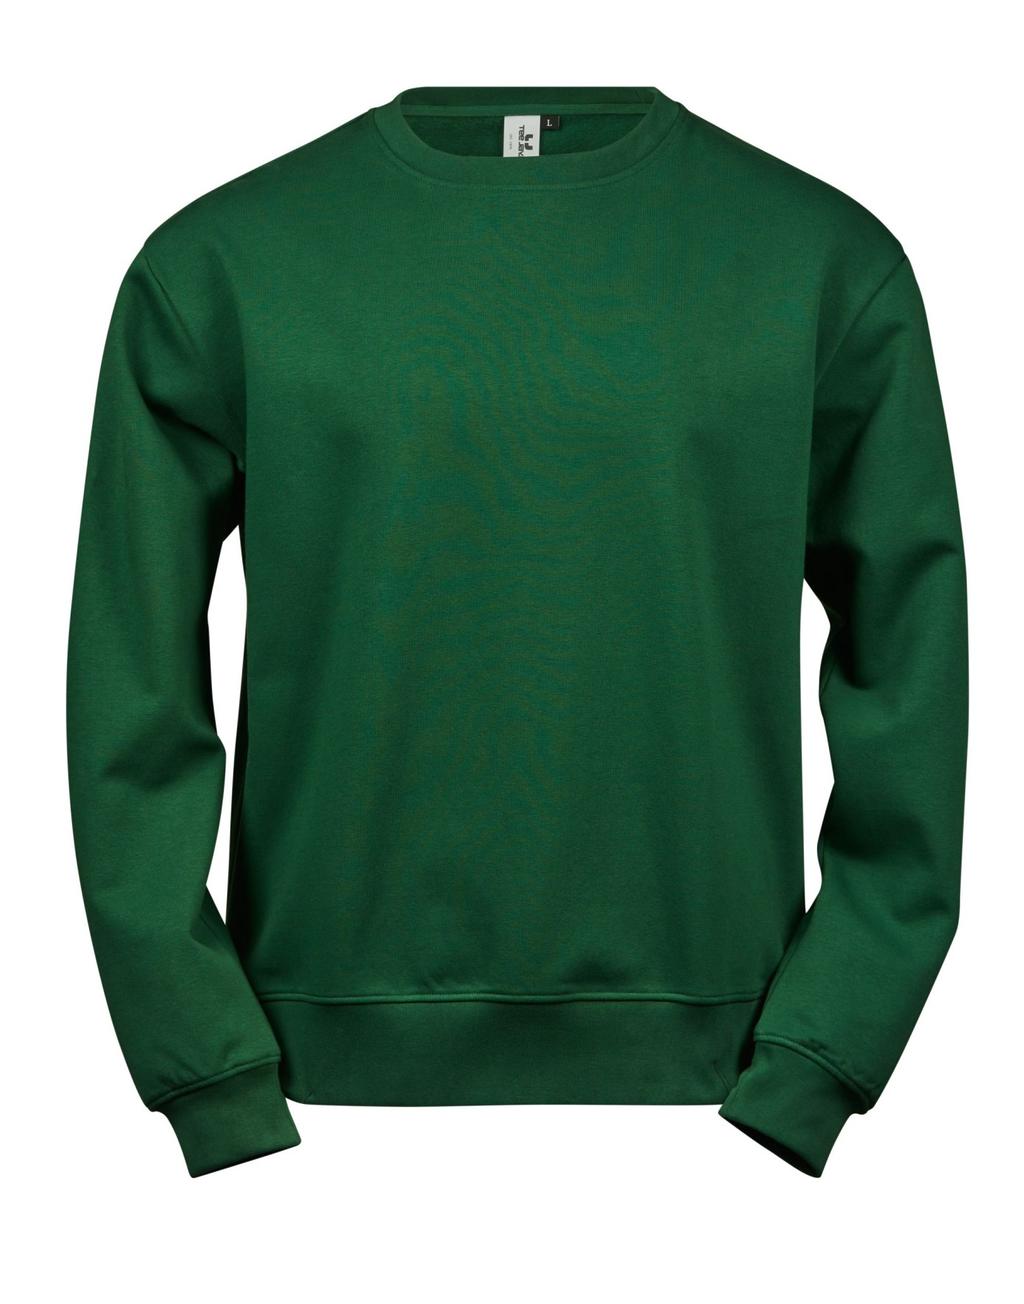  Power Sweatshirt in Farbe Forest Green